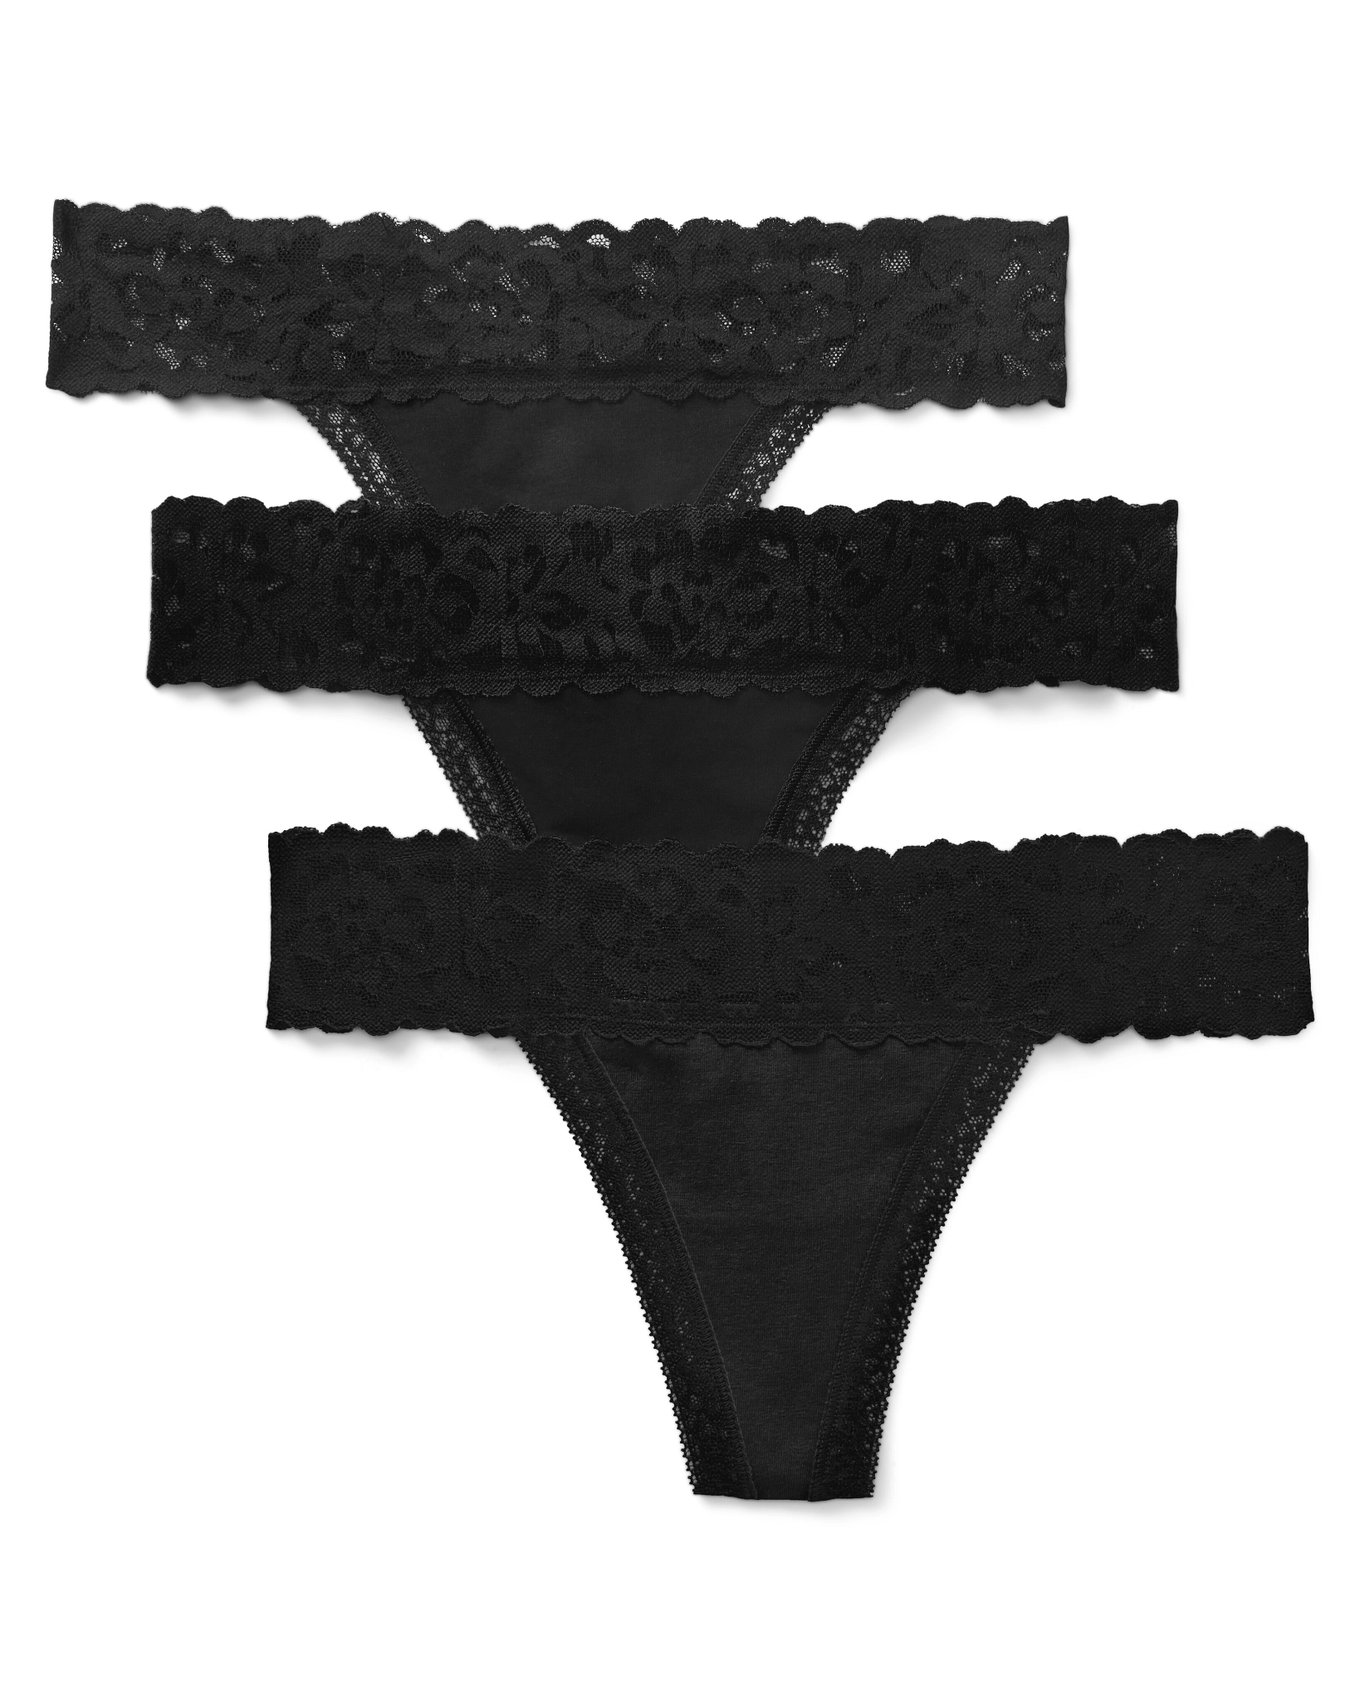 Mackenna Cotton Pack Cheeky Black 2 Cheeky Panties (Pack of 3